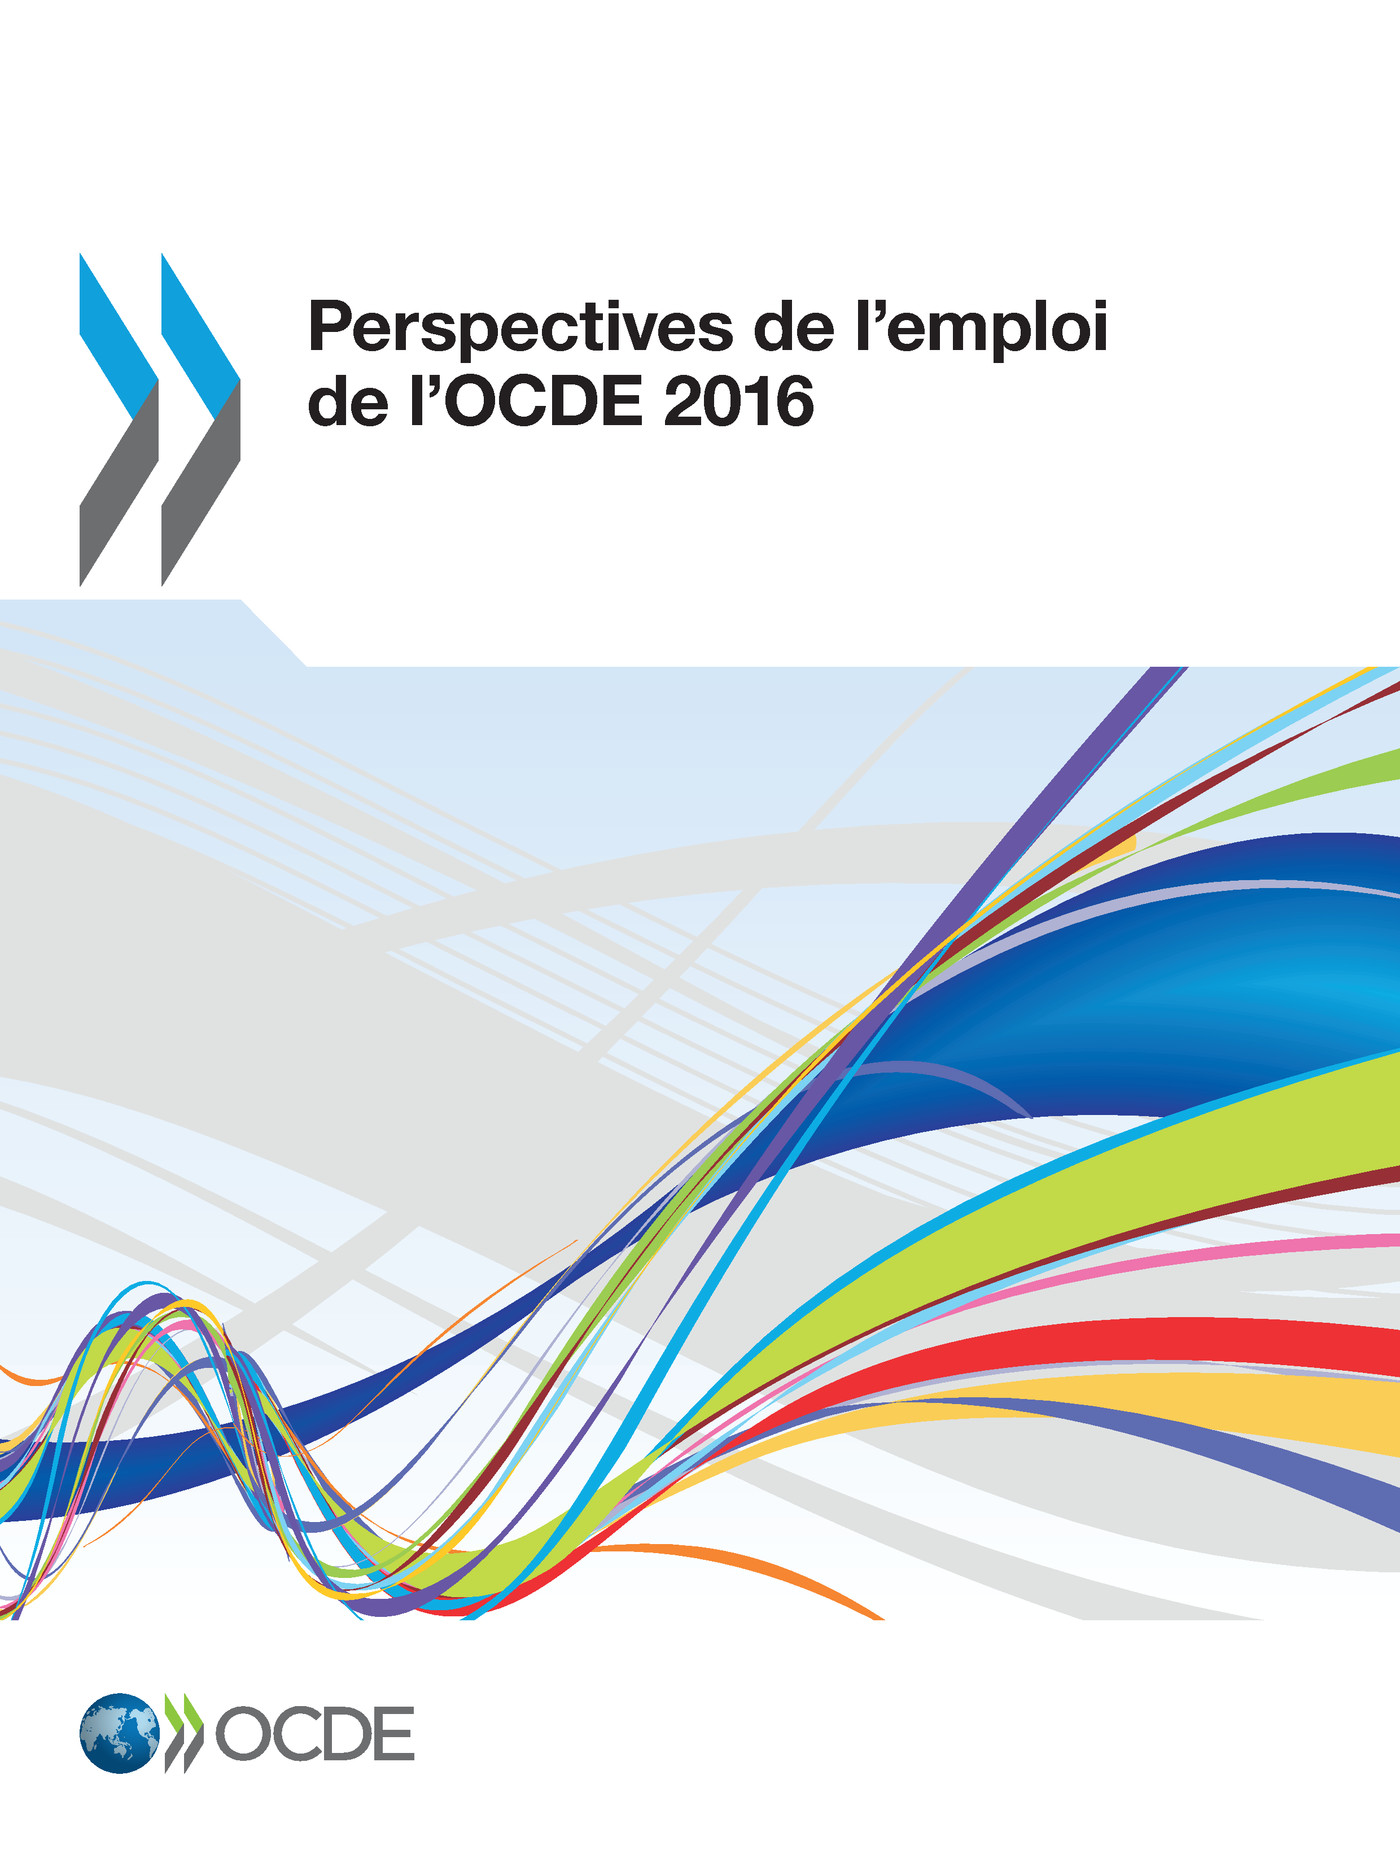 Perspectives de l'emploi de l'OCDE 2016 -  Collectif - OCDE / OECD